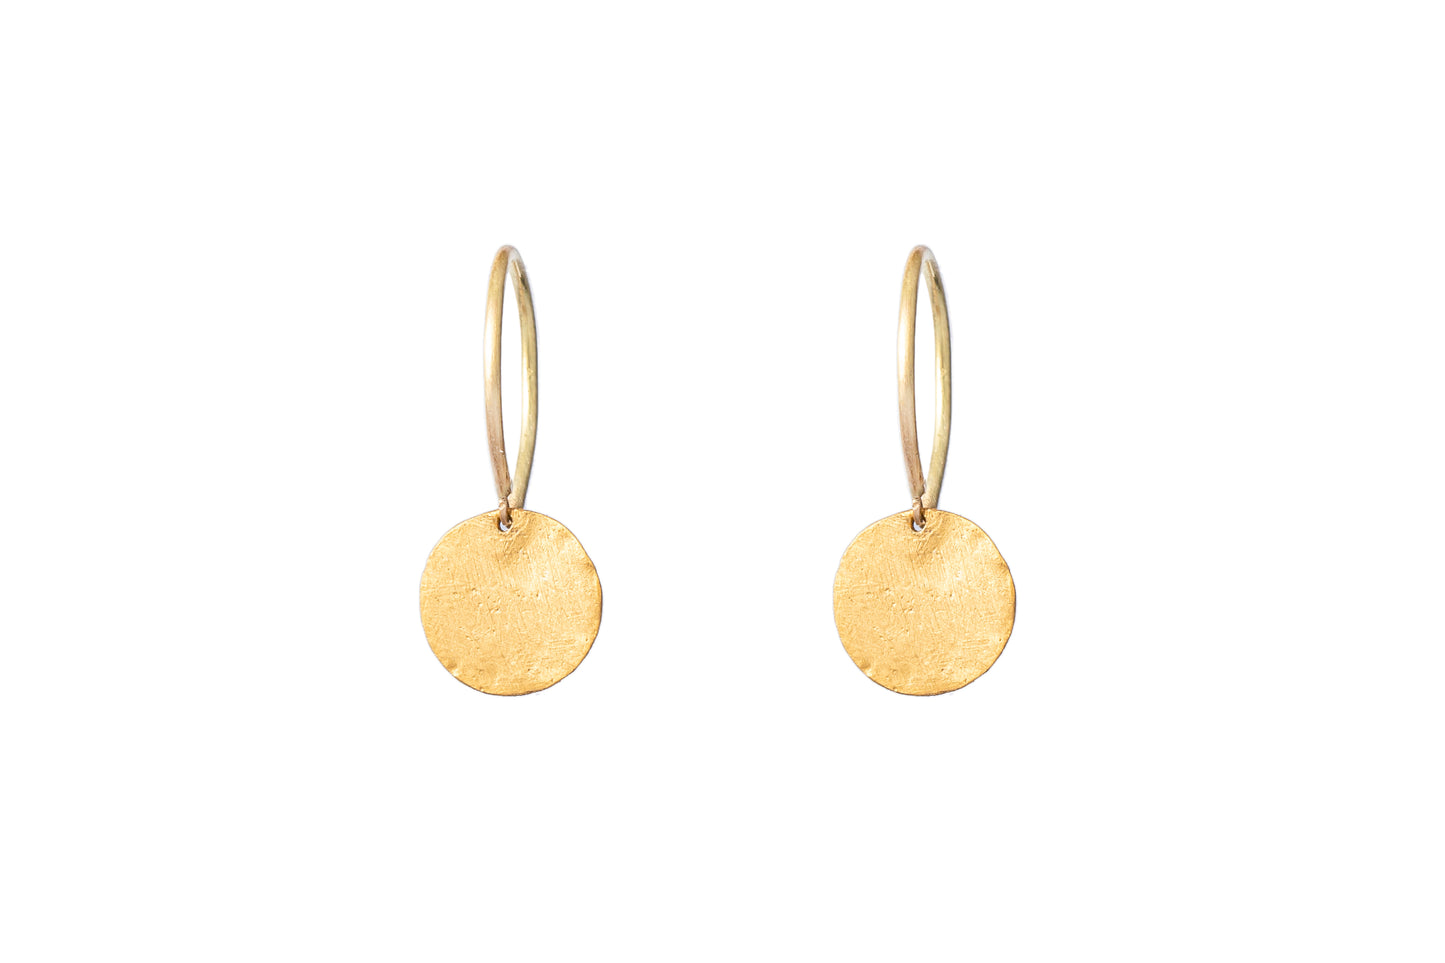 Heidi Hockenjos gold disc earrings